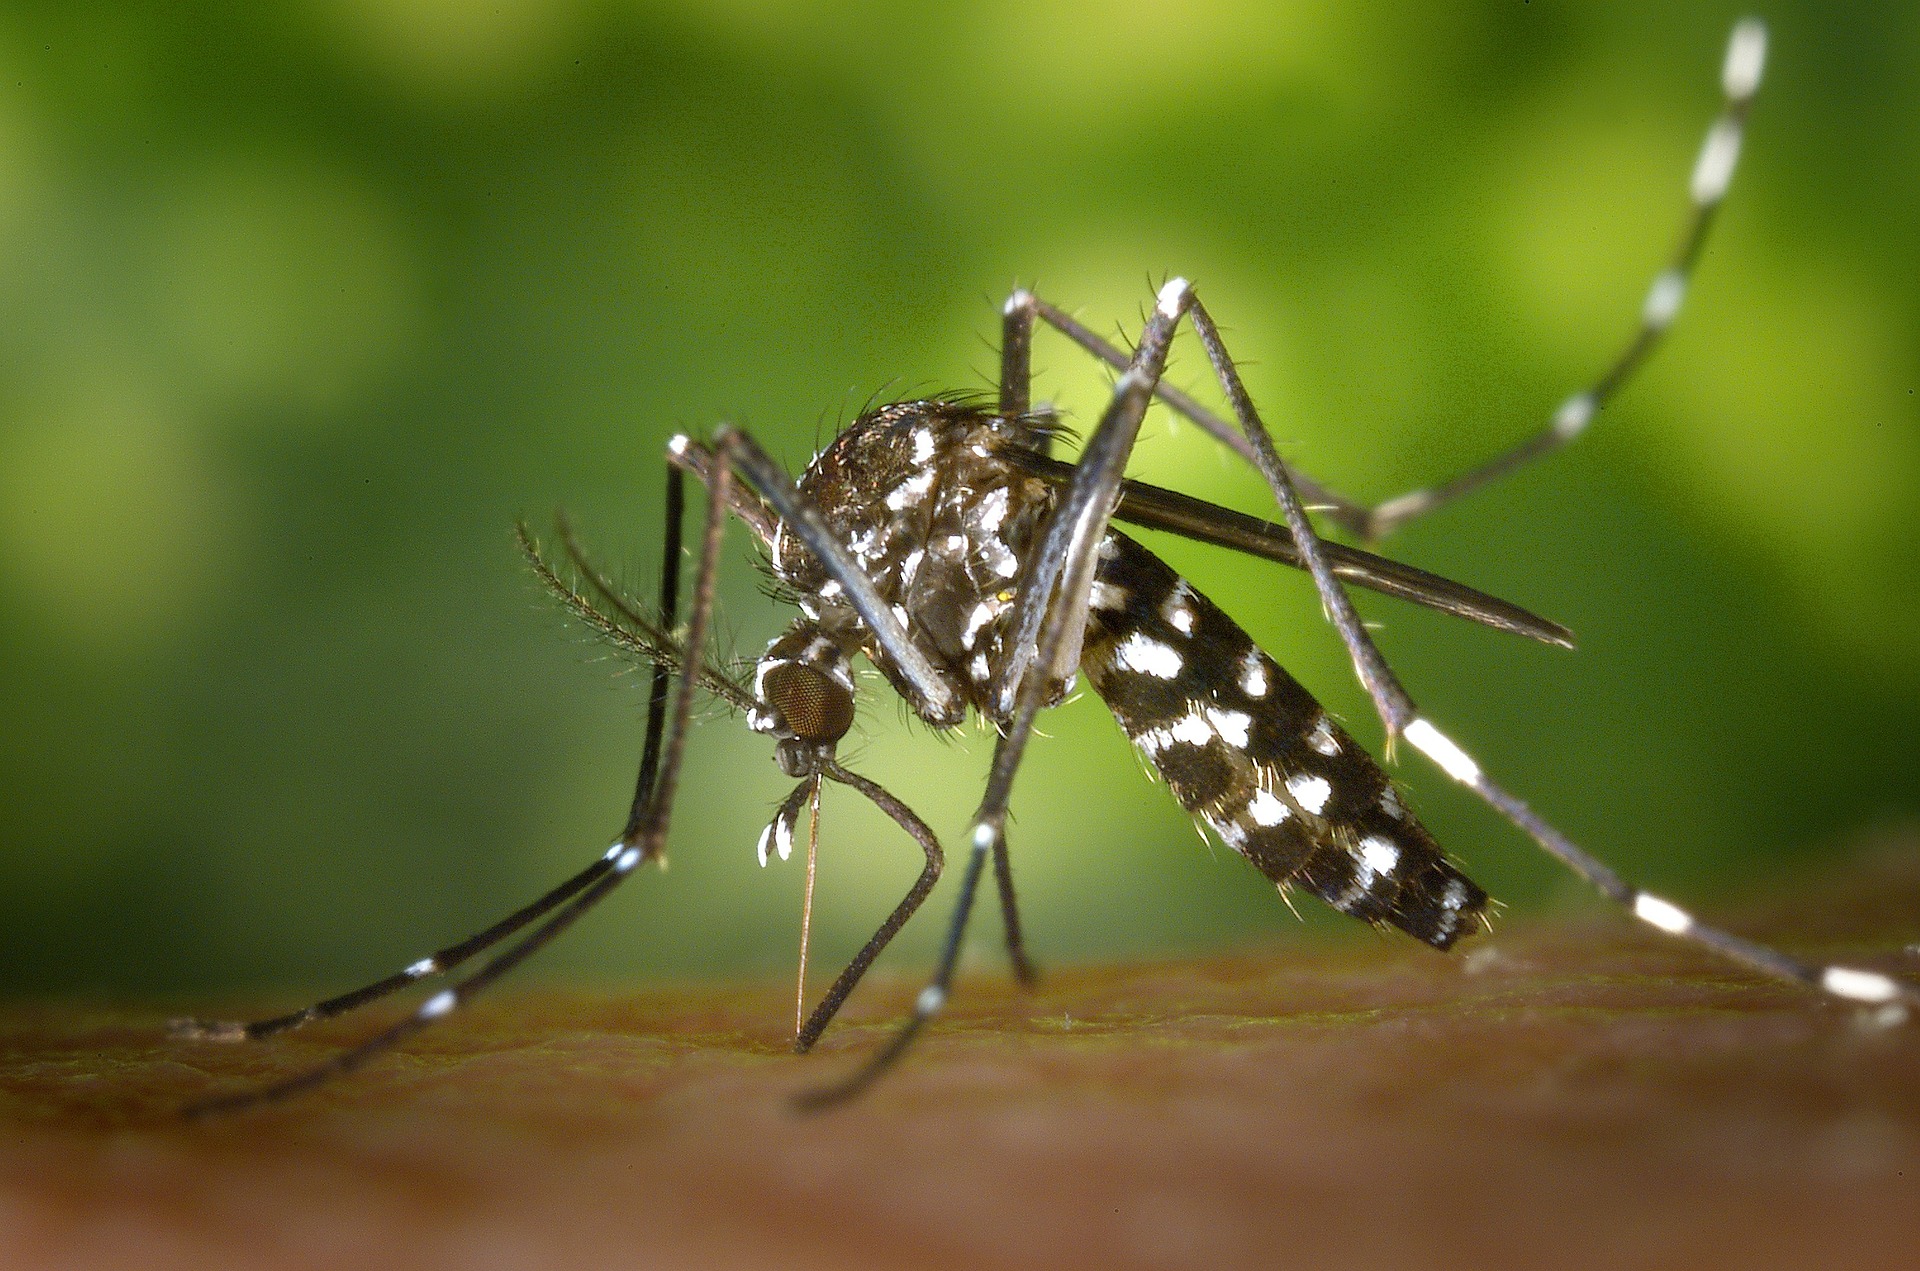 Asian tiger mosquitoes can transmit viruses like Dengue or Zika.